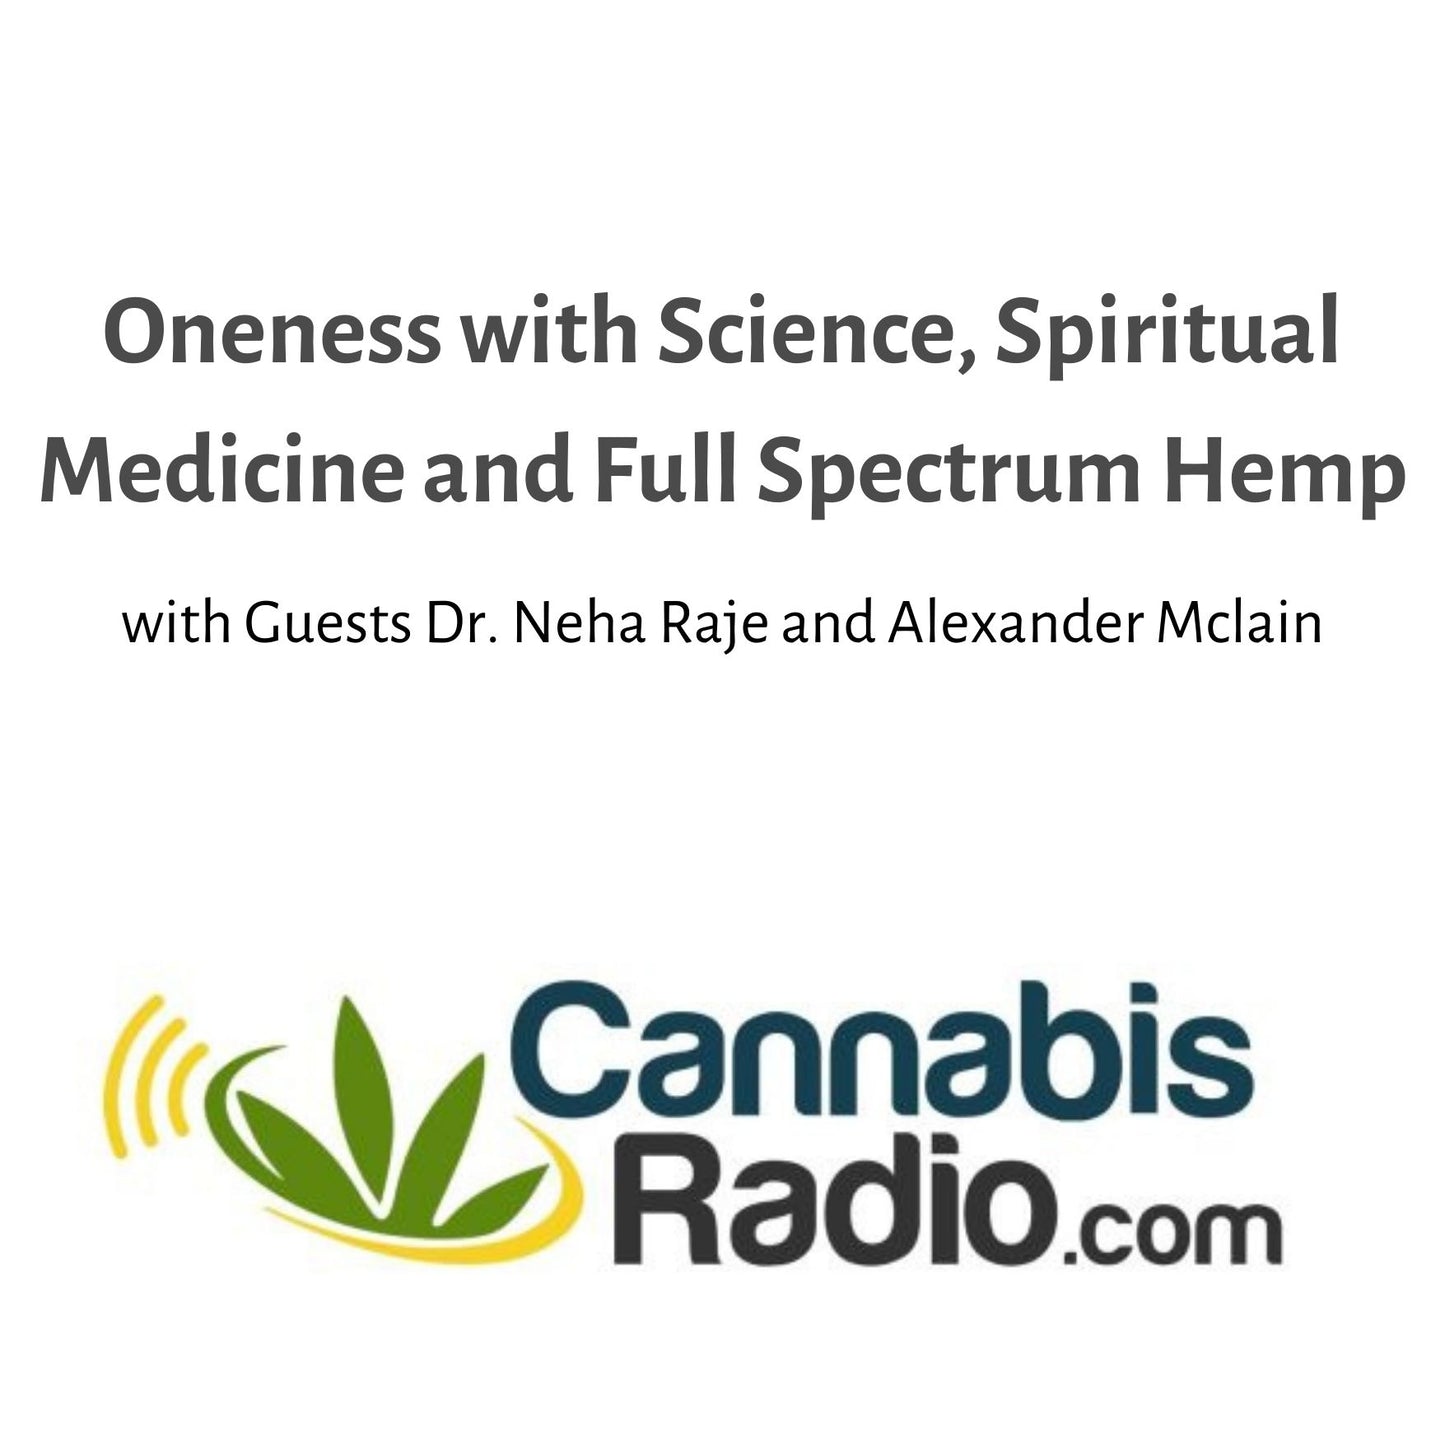 Oneness with Science, Spiritual Medicine and Full Spectrum Hemp